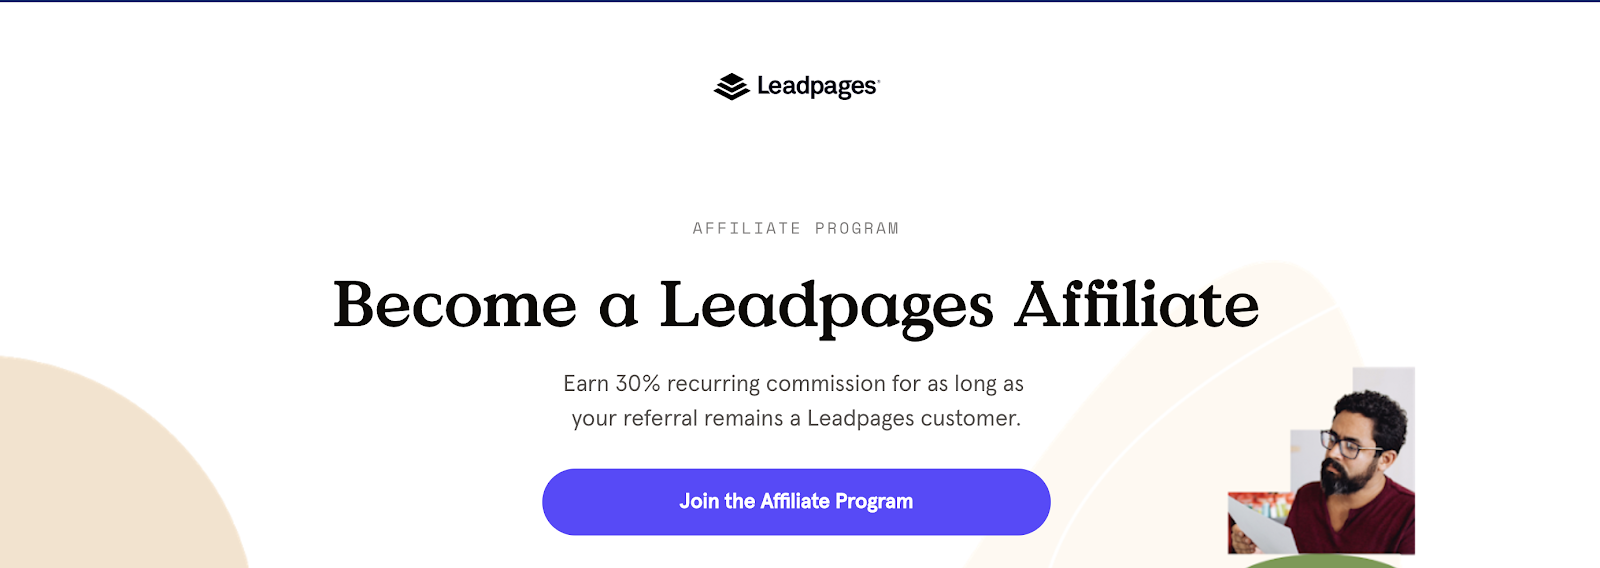 LeadPages Affiliate Program Landing Page (Screenshot)